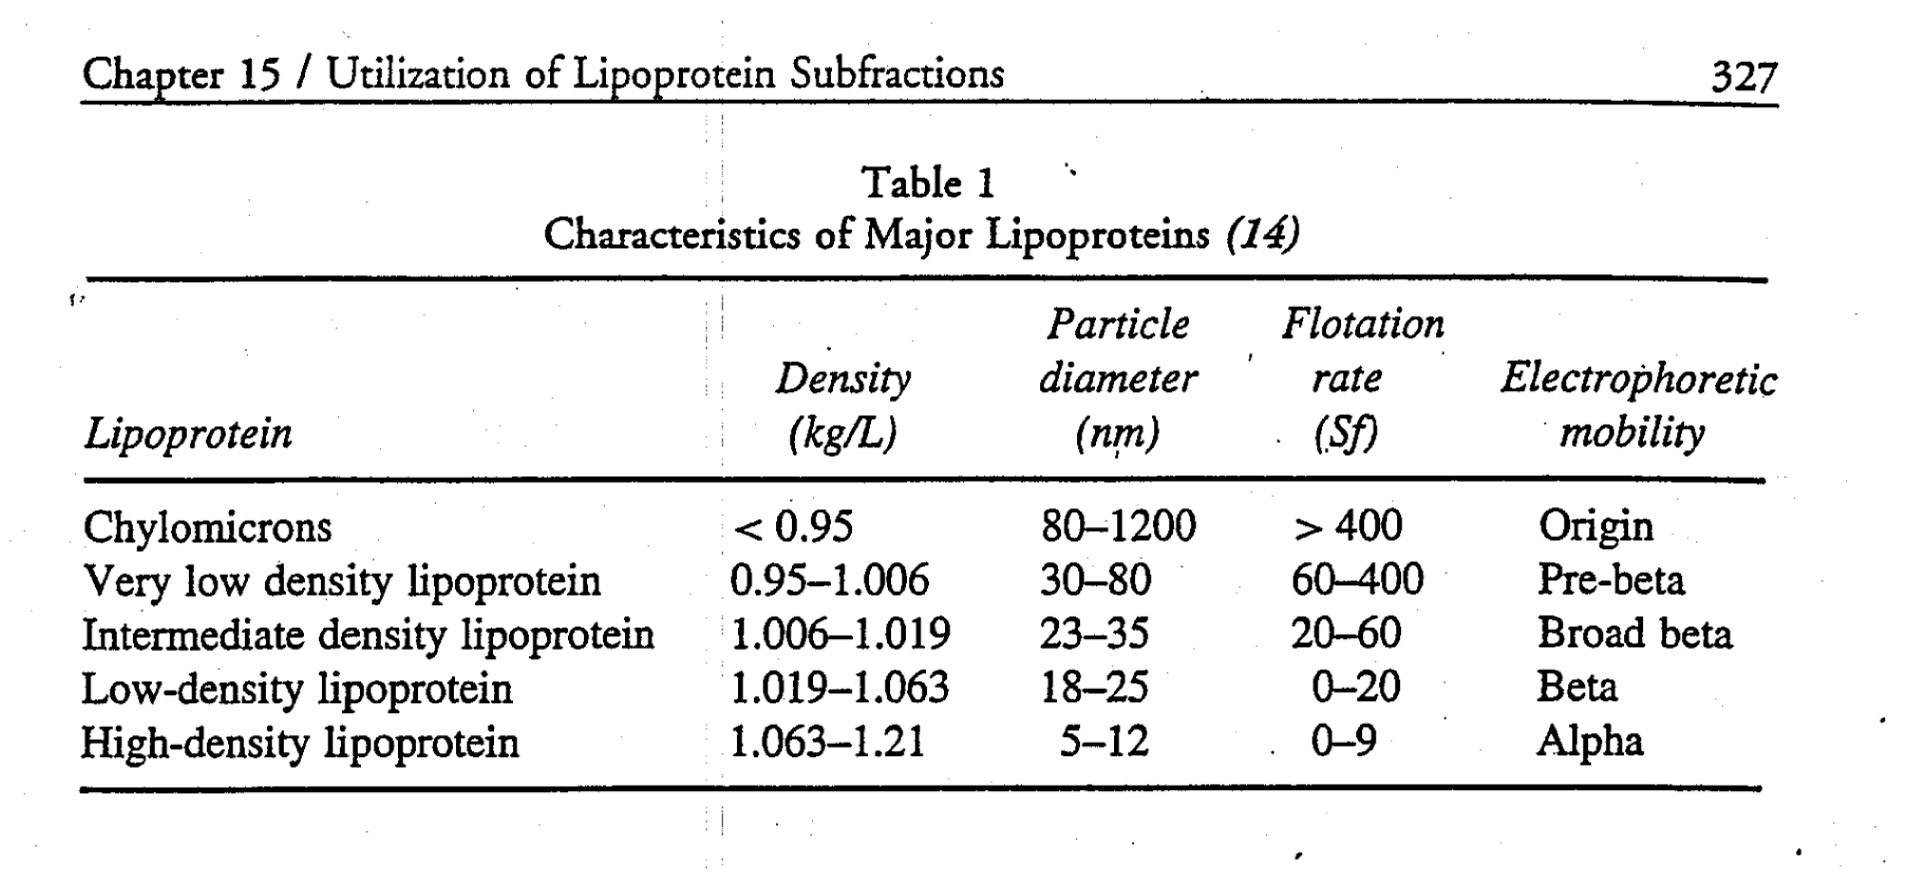 lipoprotein characteristics